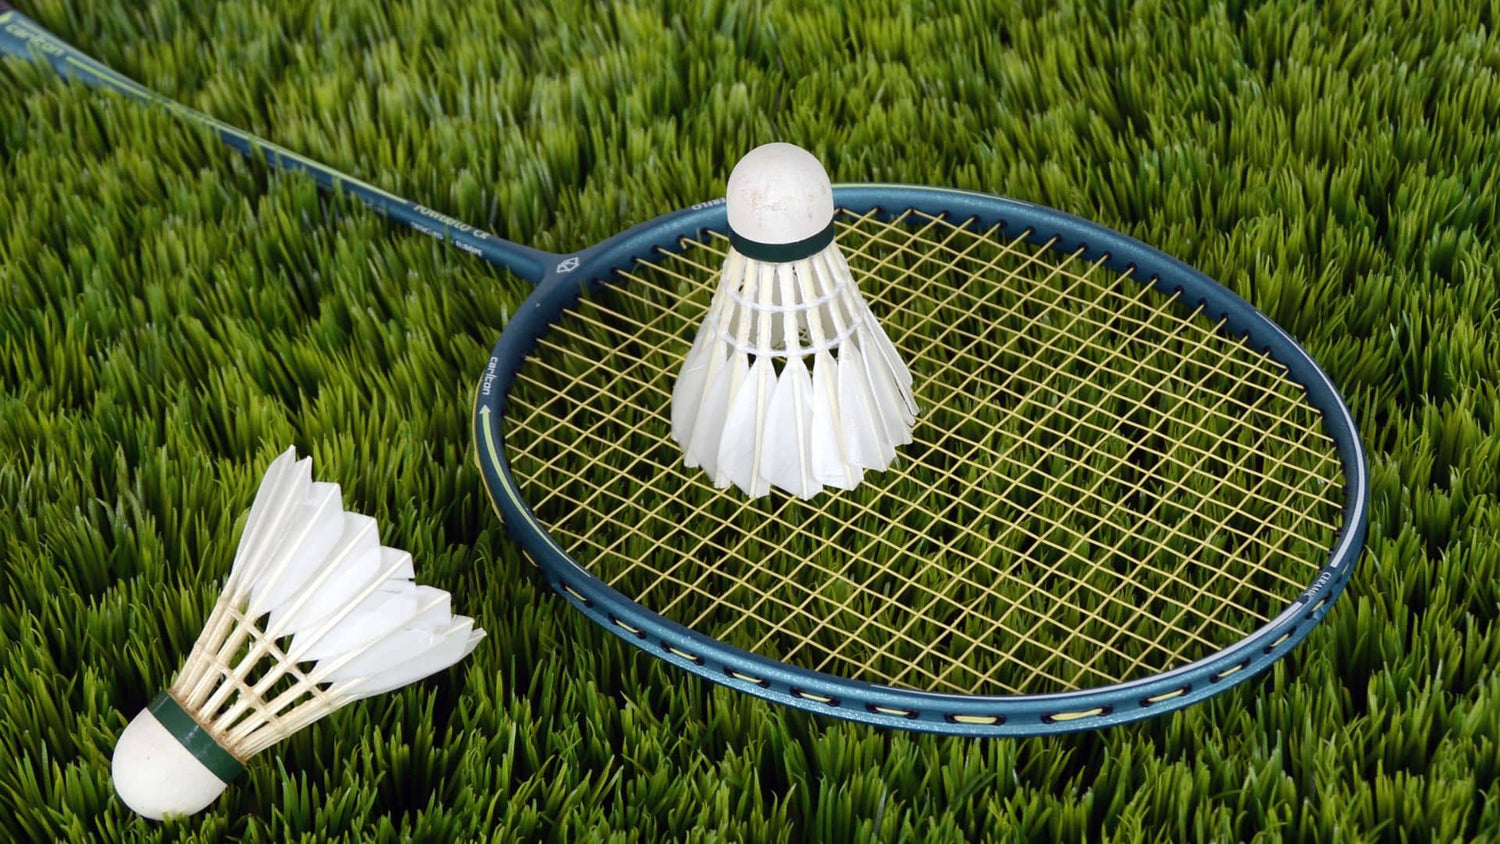 Classic Sculptured Trophies - Badminton